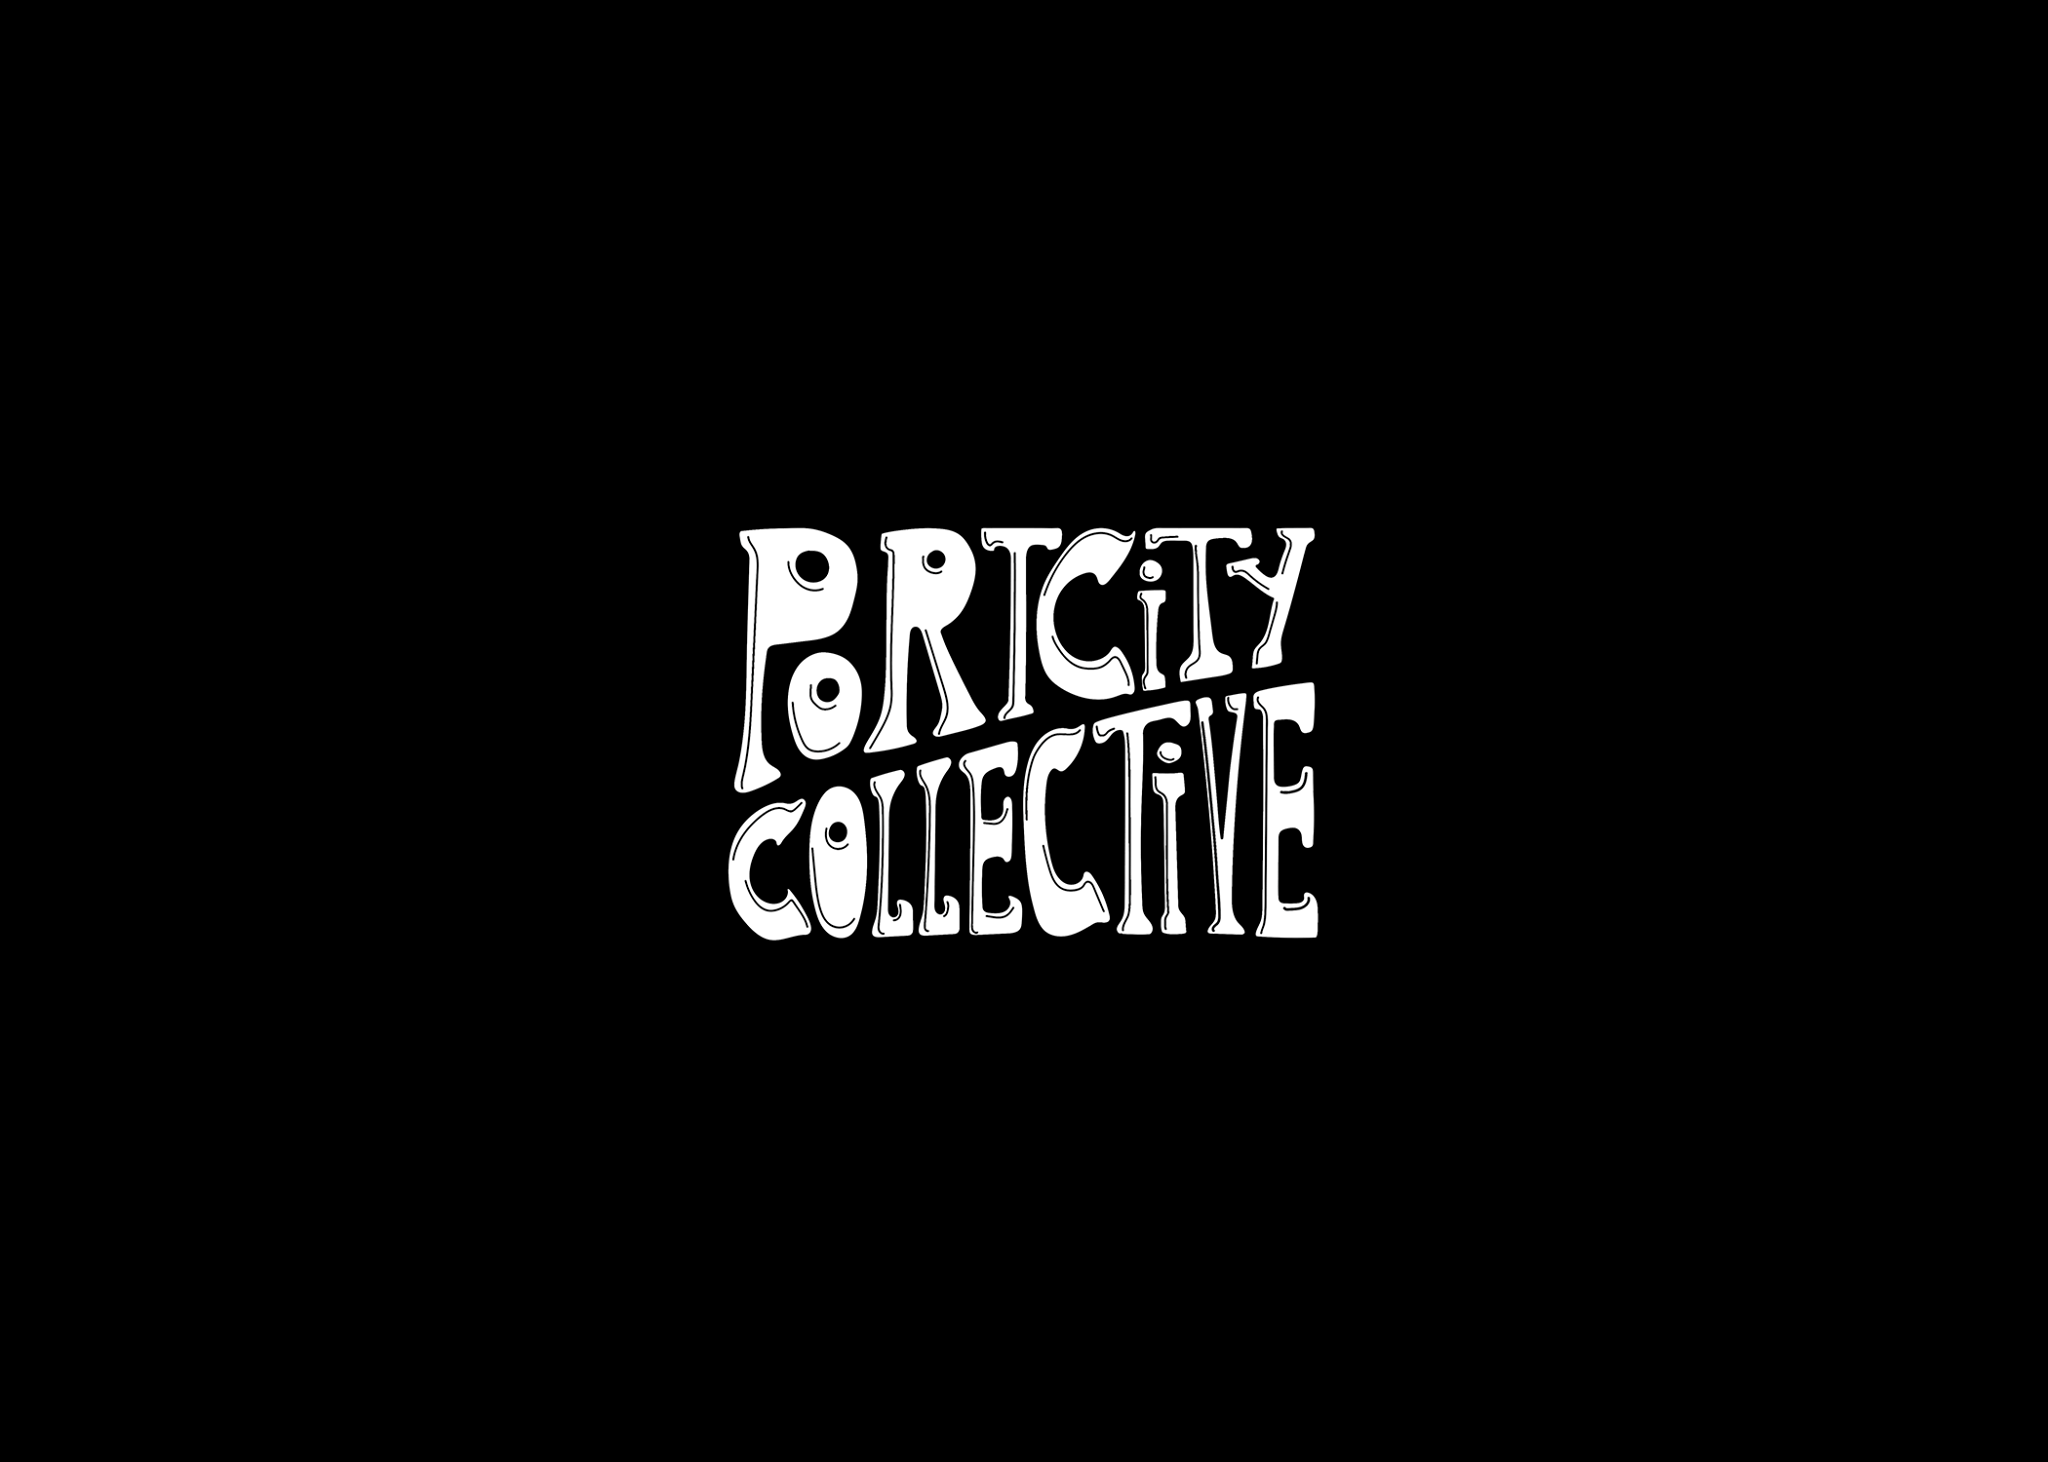 Port City Collective Logo